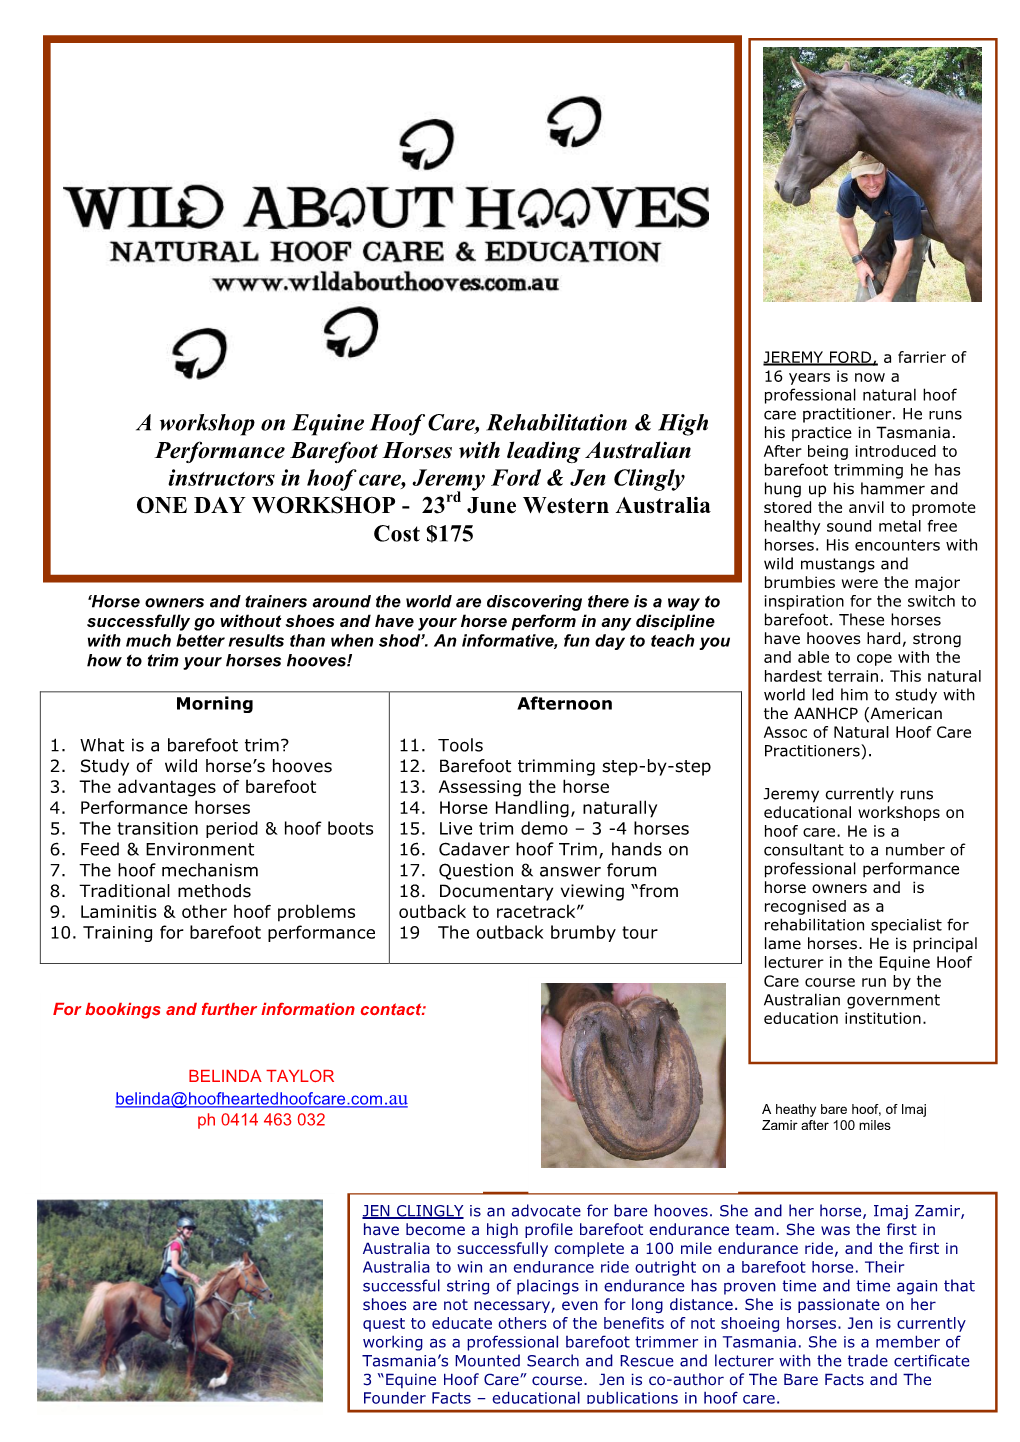 A Workshop on Equine Hoof Care, Rehabilitation & High Performance